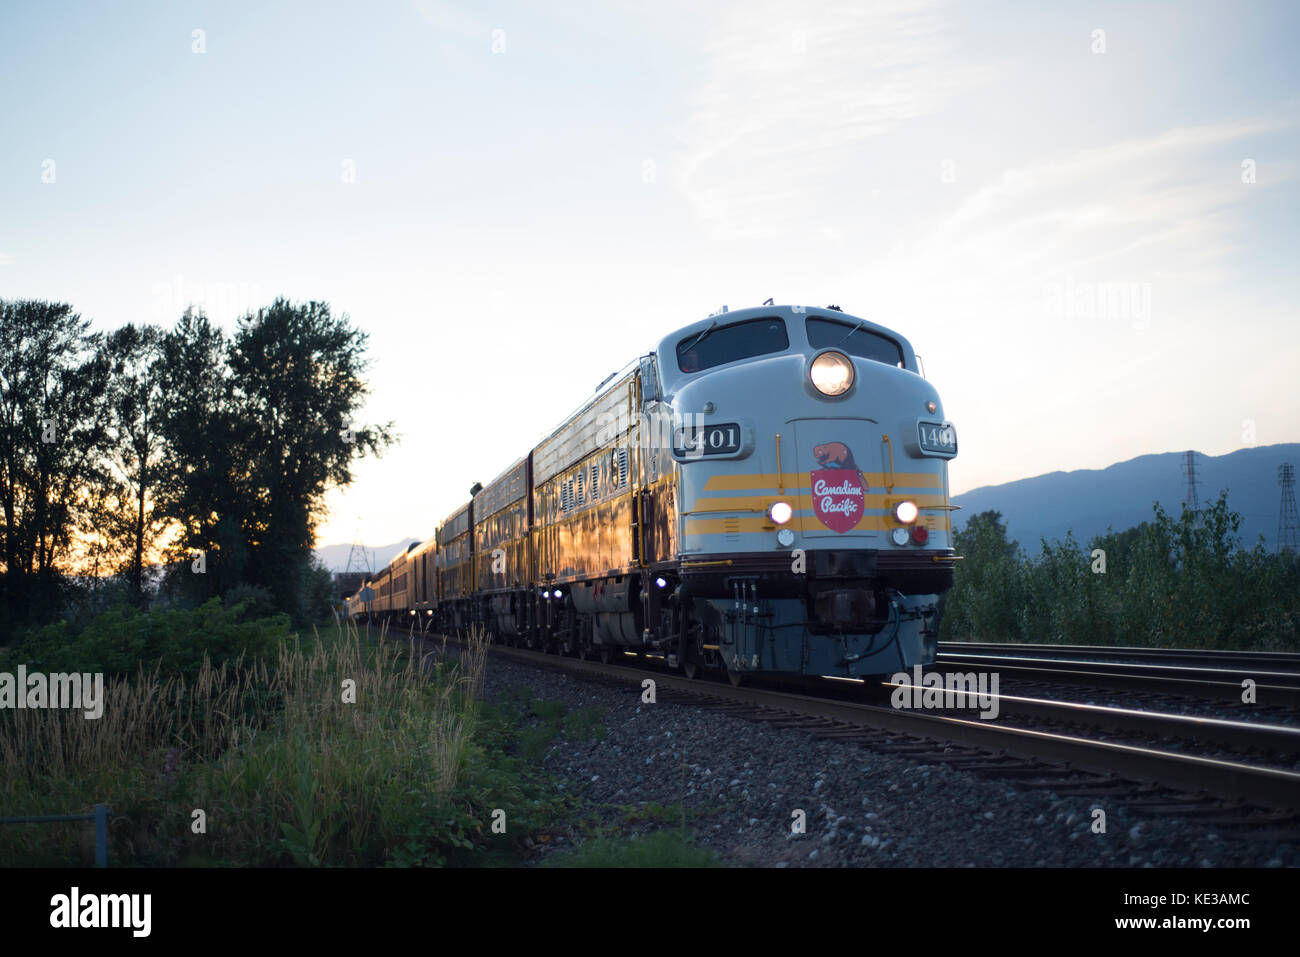 Canadian Pacific (CP Rail) Canada 150 train in Port Moody, BC, Canada Stock Photo